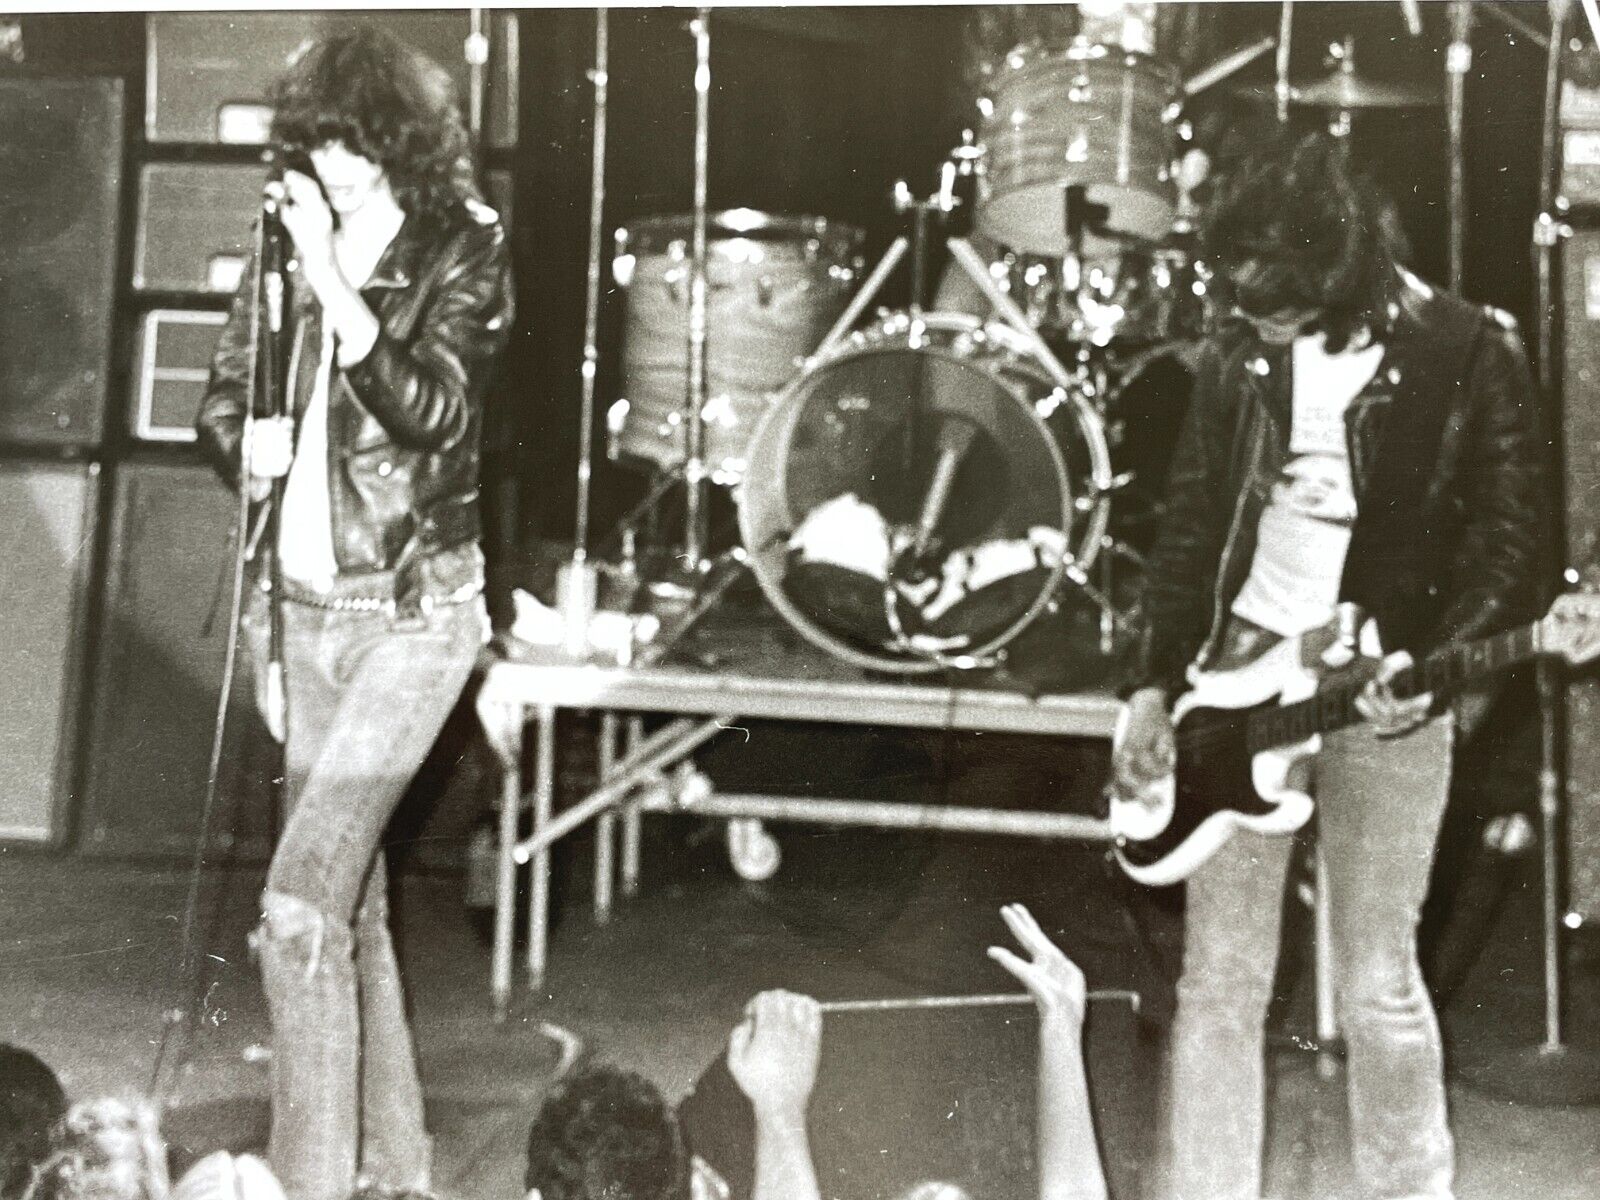 The Ramones 1980 Concert Double Weight Original 8x10 Professional Photo LA Punk